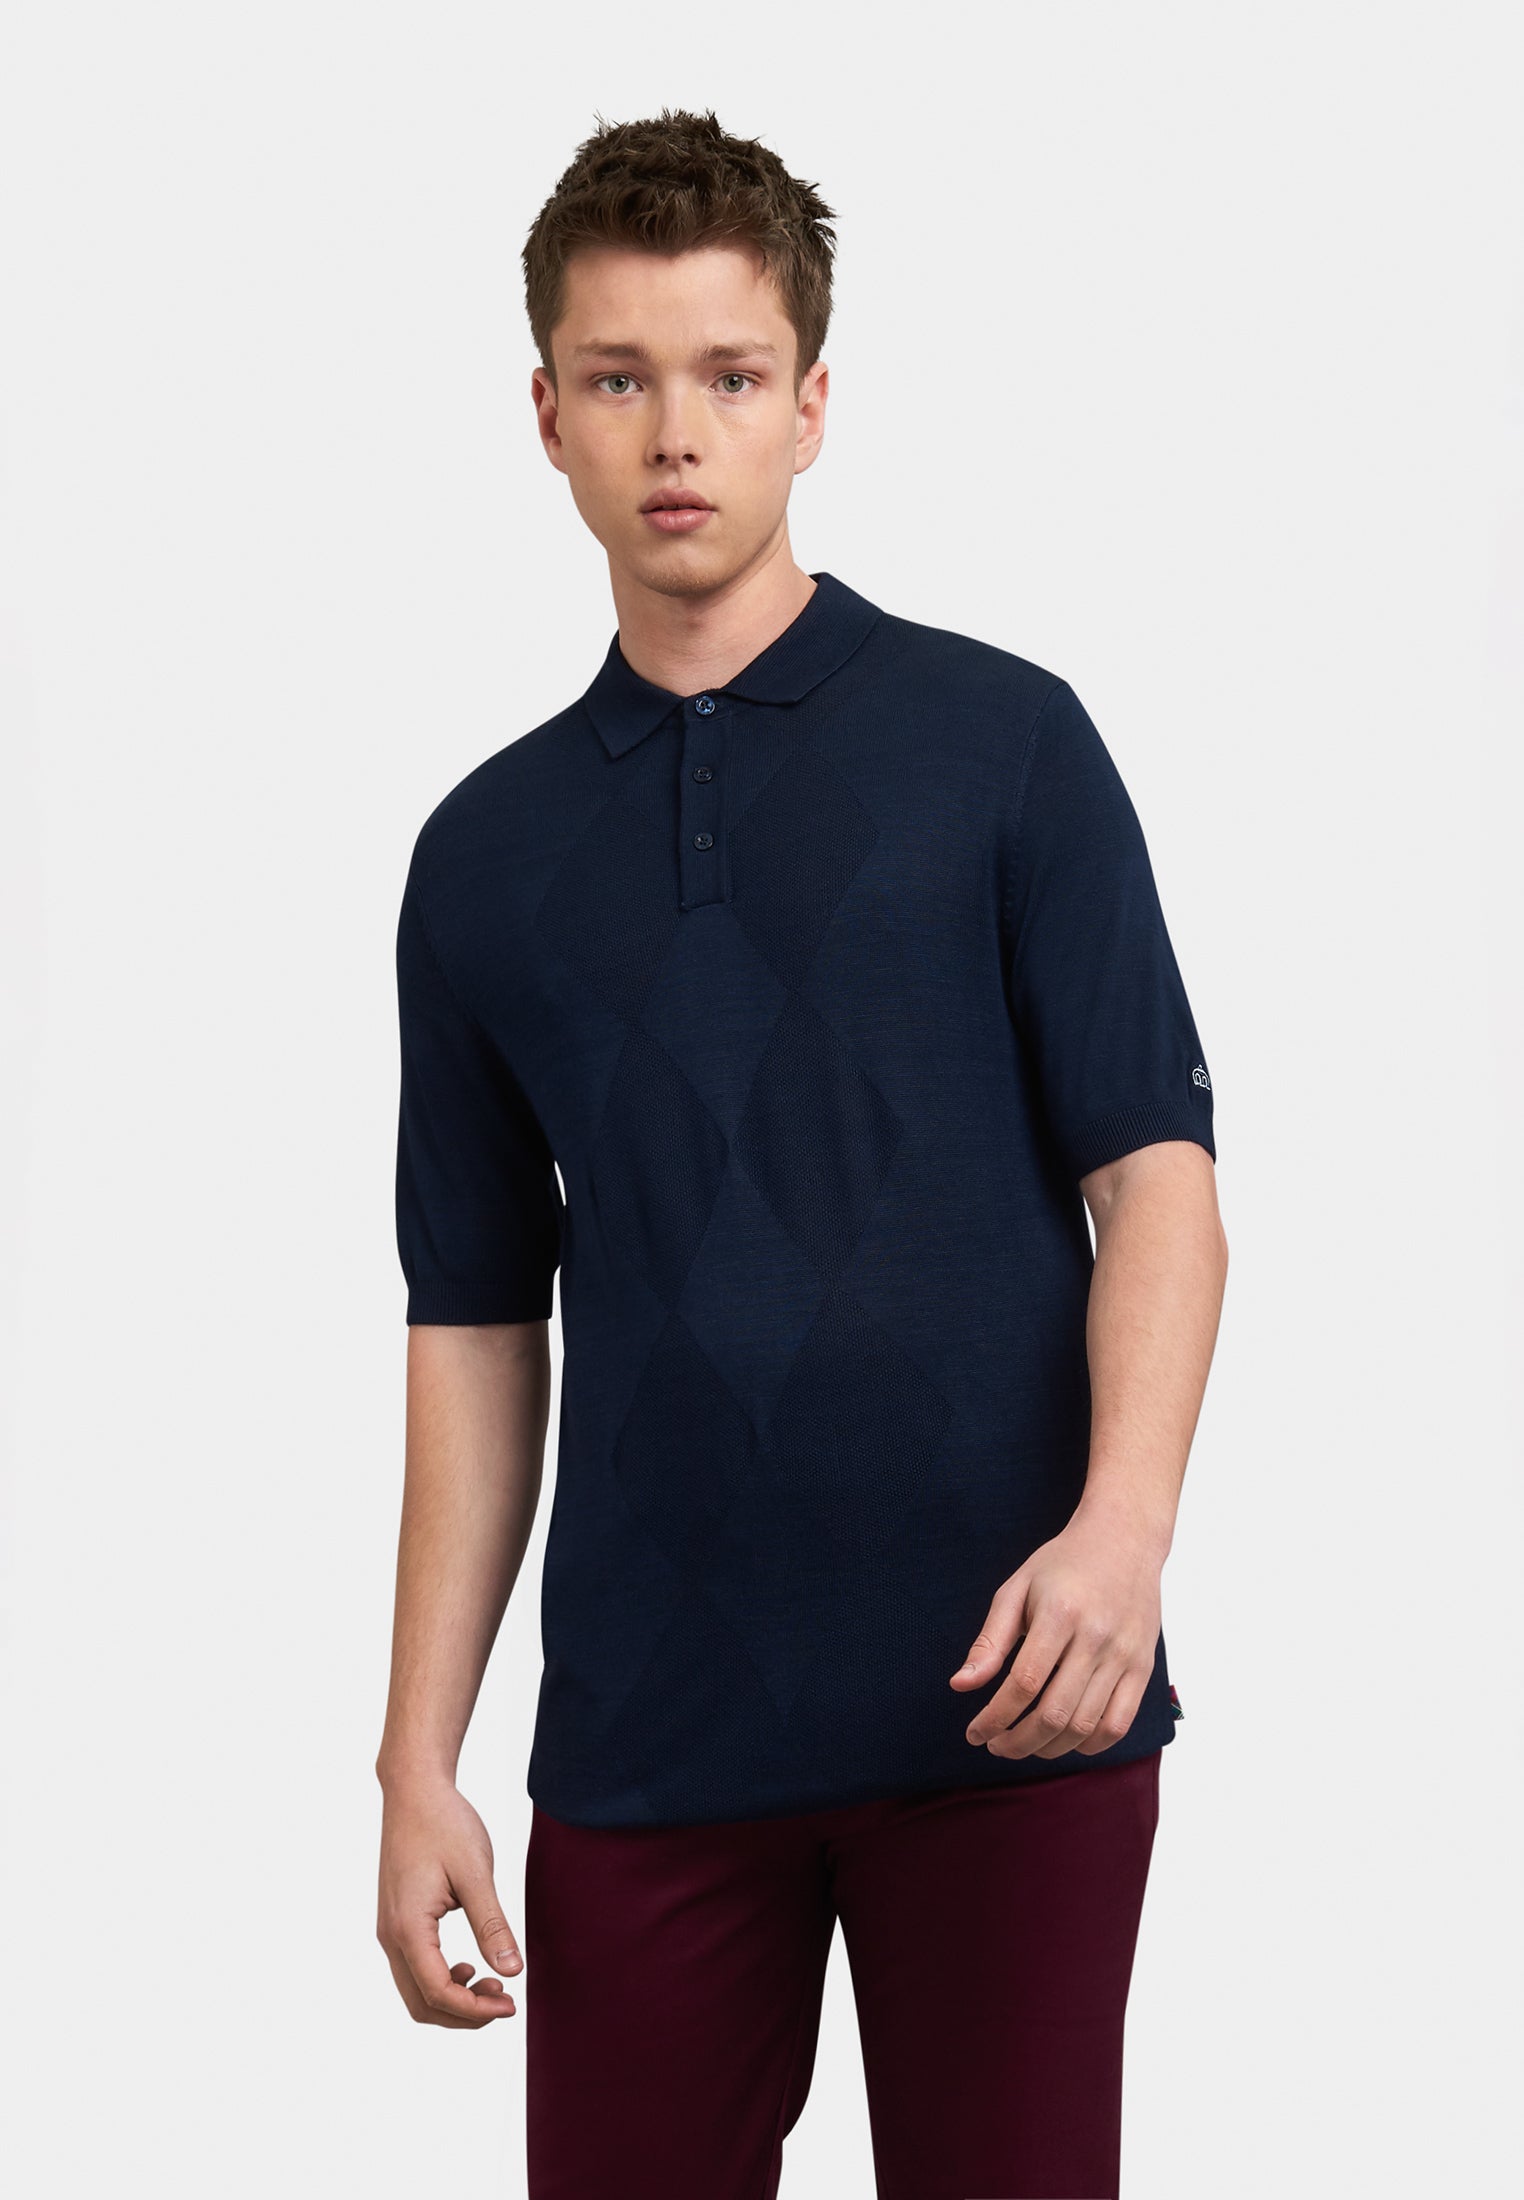 Stokes Argyle Knitted Polo Shirt Front - Merc London